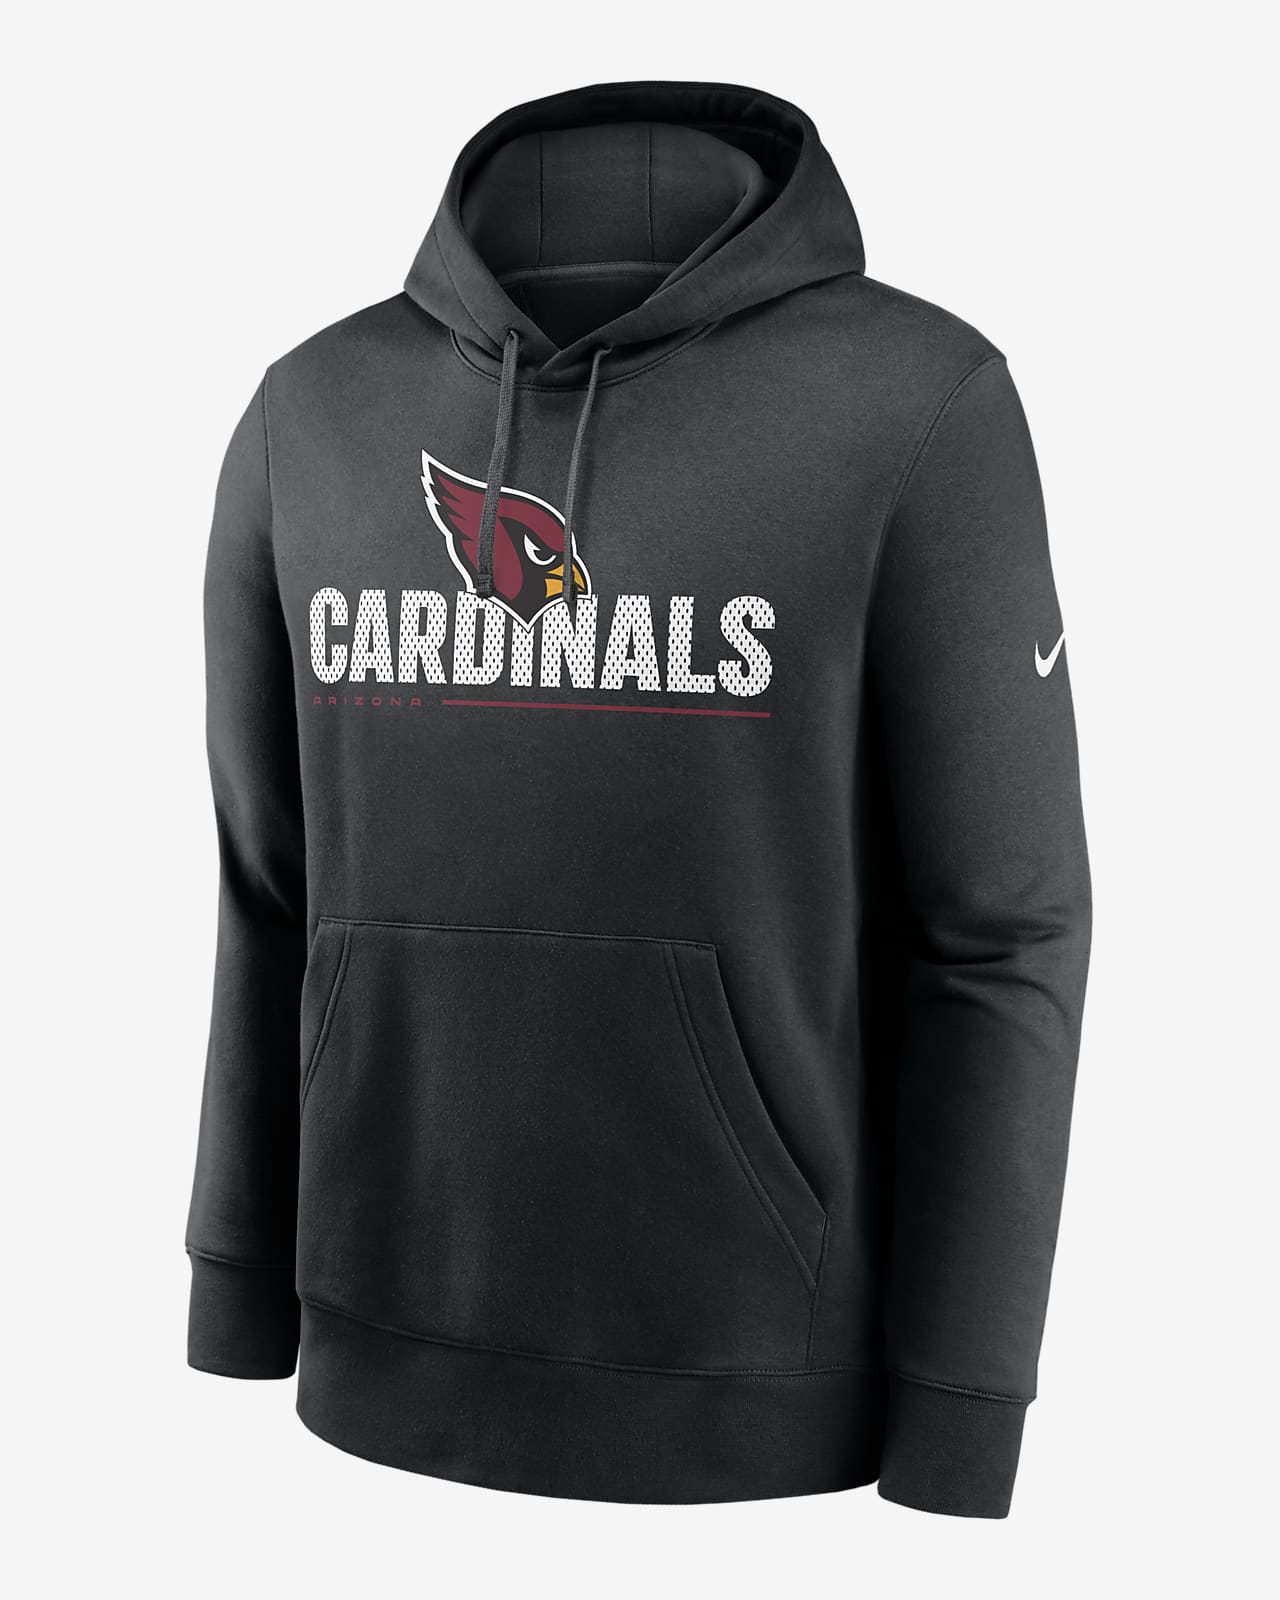 az cardinals hooded sweatshirt